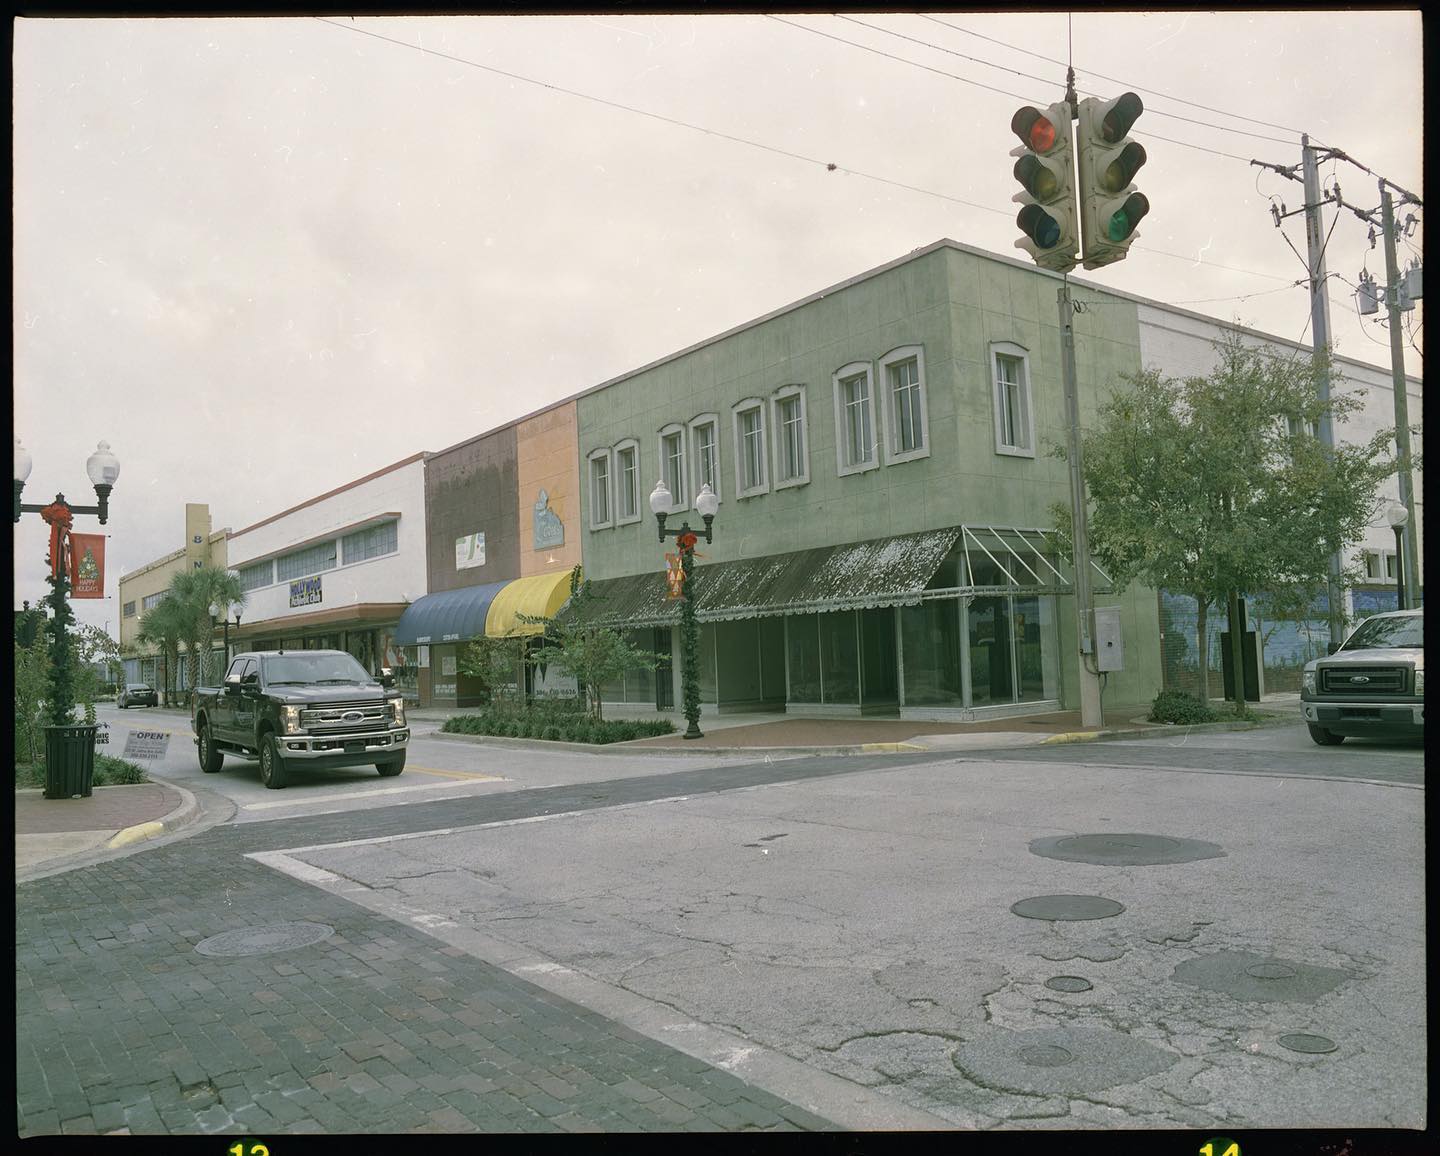 Standoff.

Downtown Palatka is kind of quiet. #pentax67 #cinestill50d #film #filmphotography #rollfilmweek #rollfilmweek2020